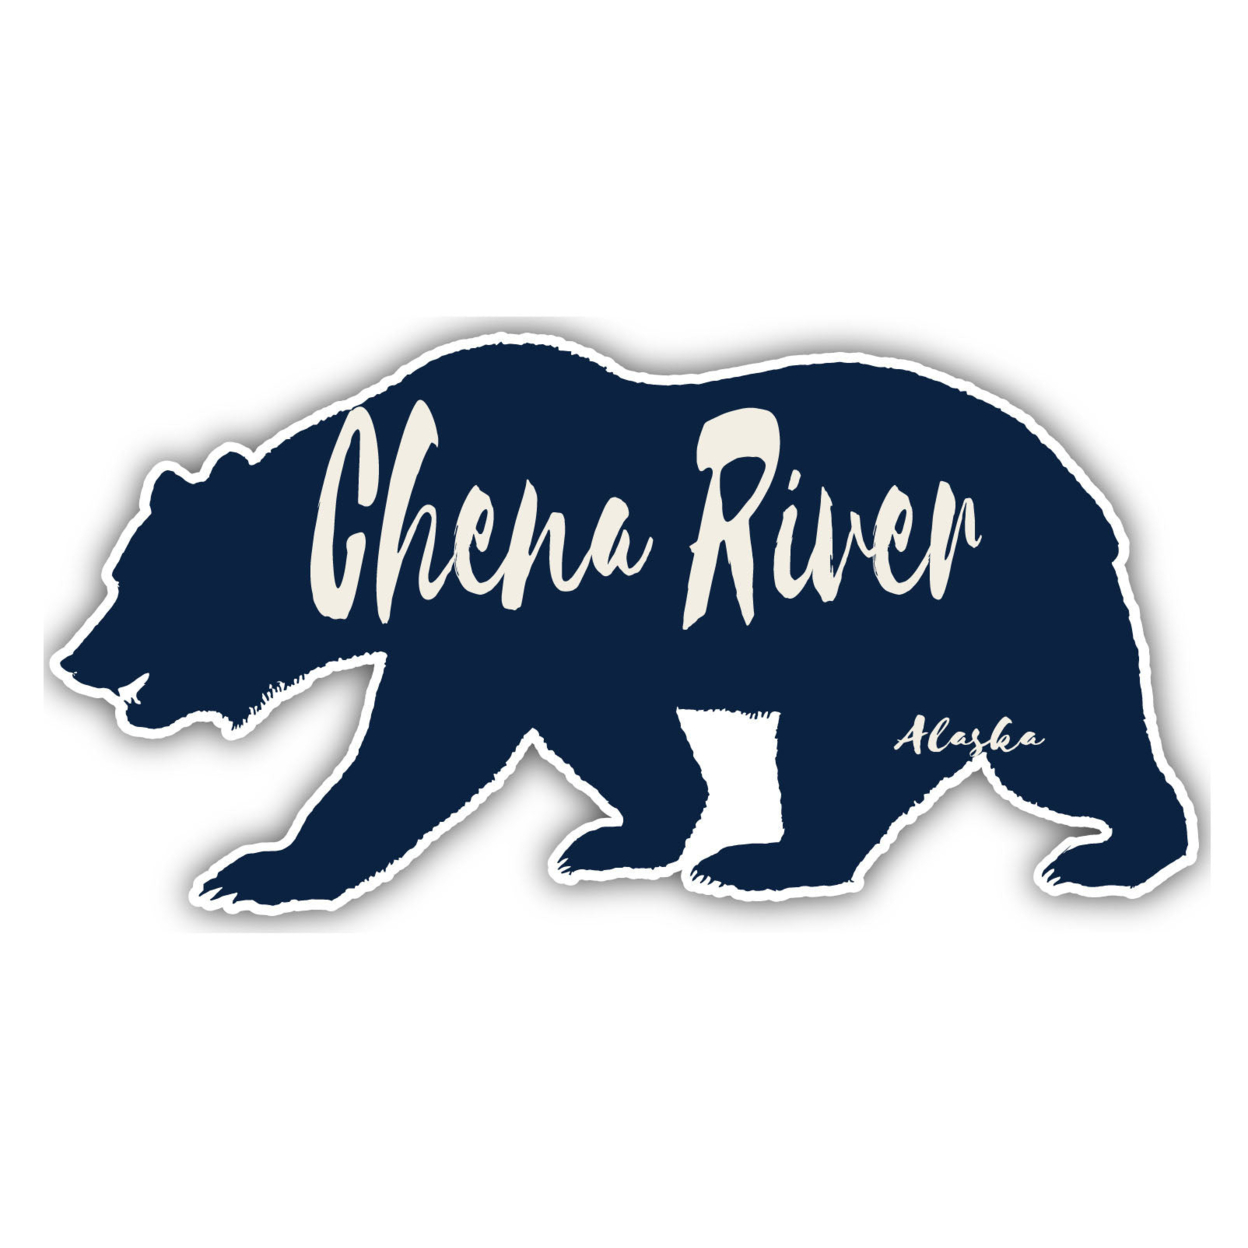 Chena River Alaska Souvenir Decorative Stickers (Choose Theme And Size) - 4-Pack, 10-Inch, Bear